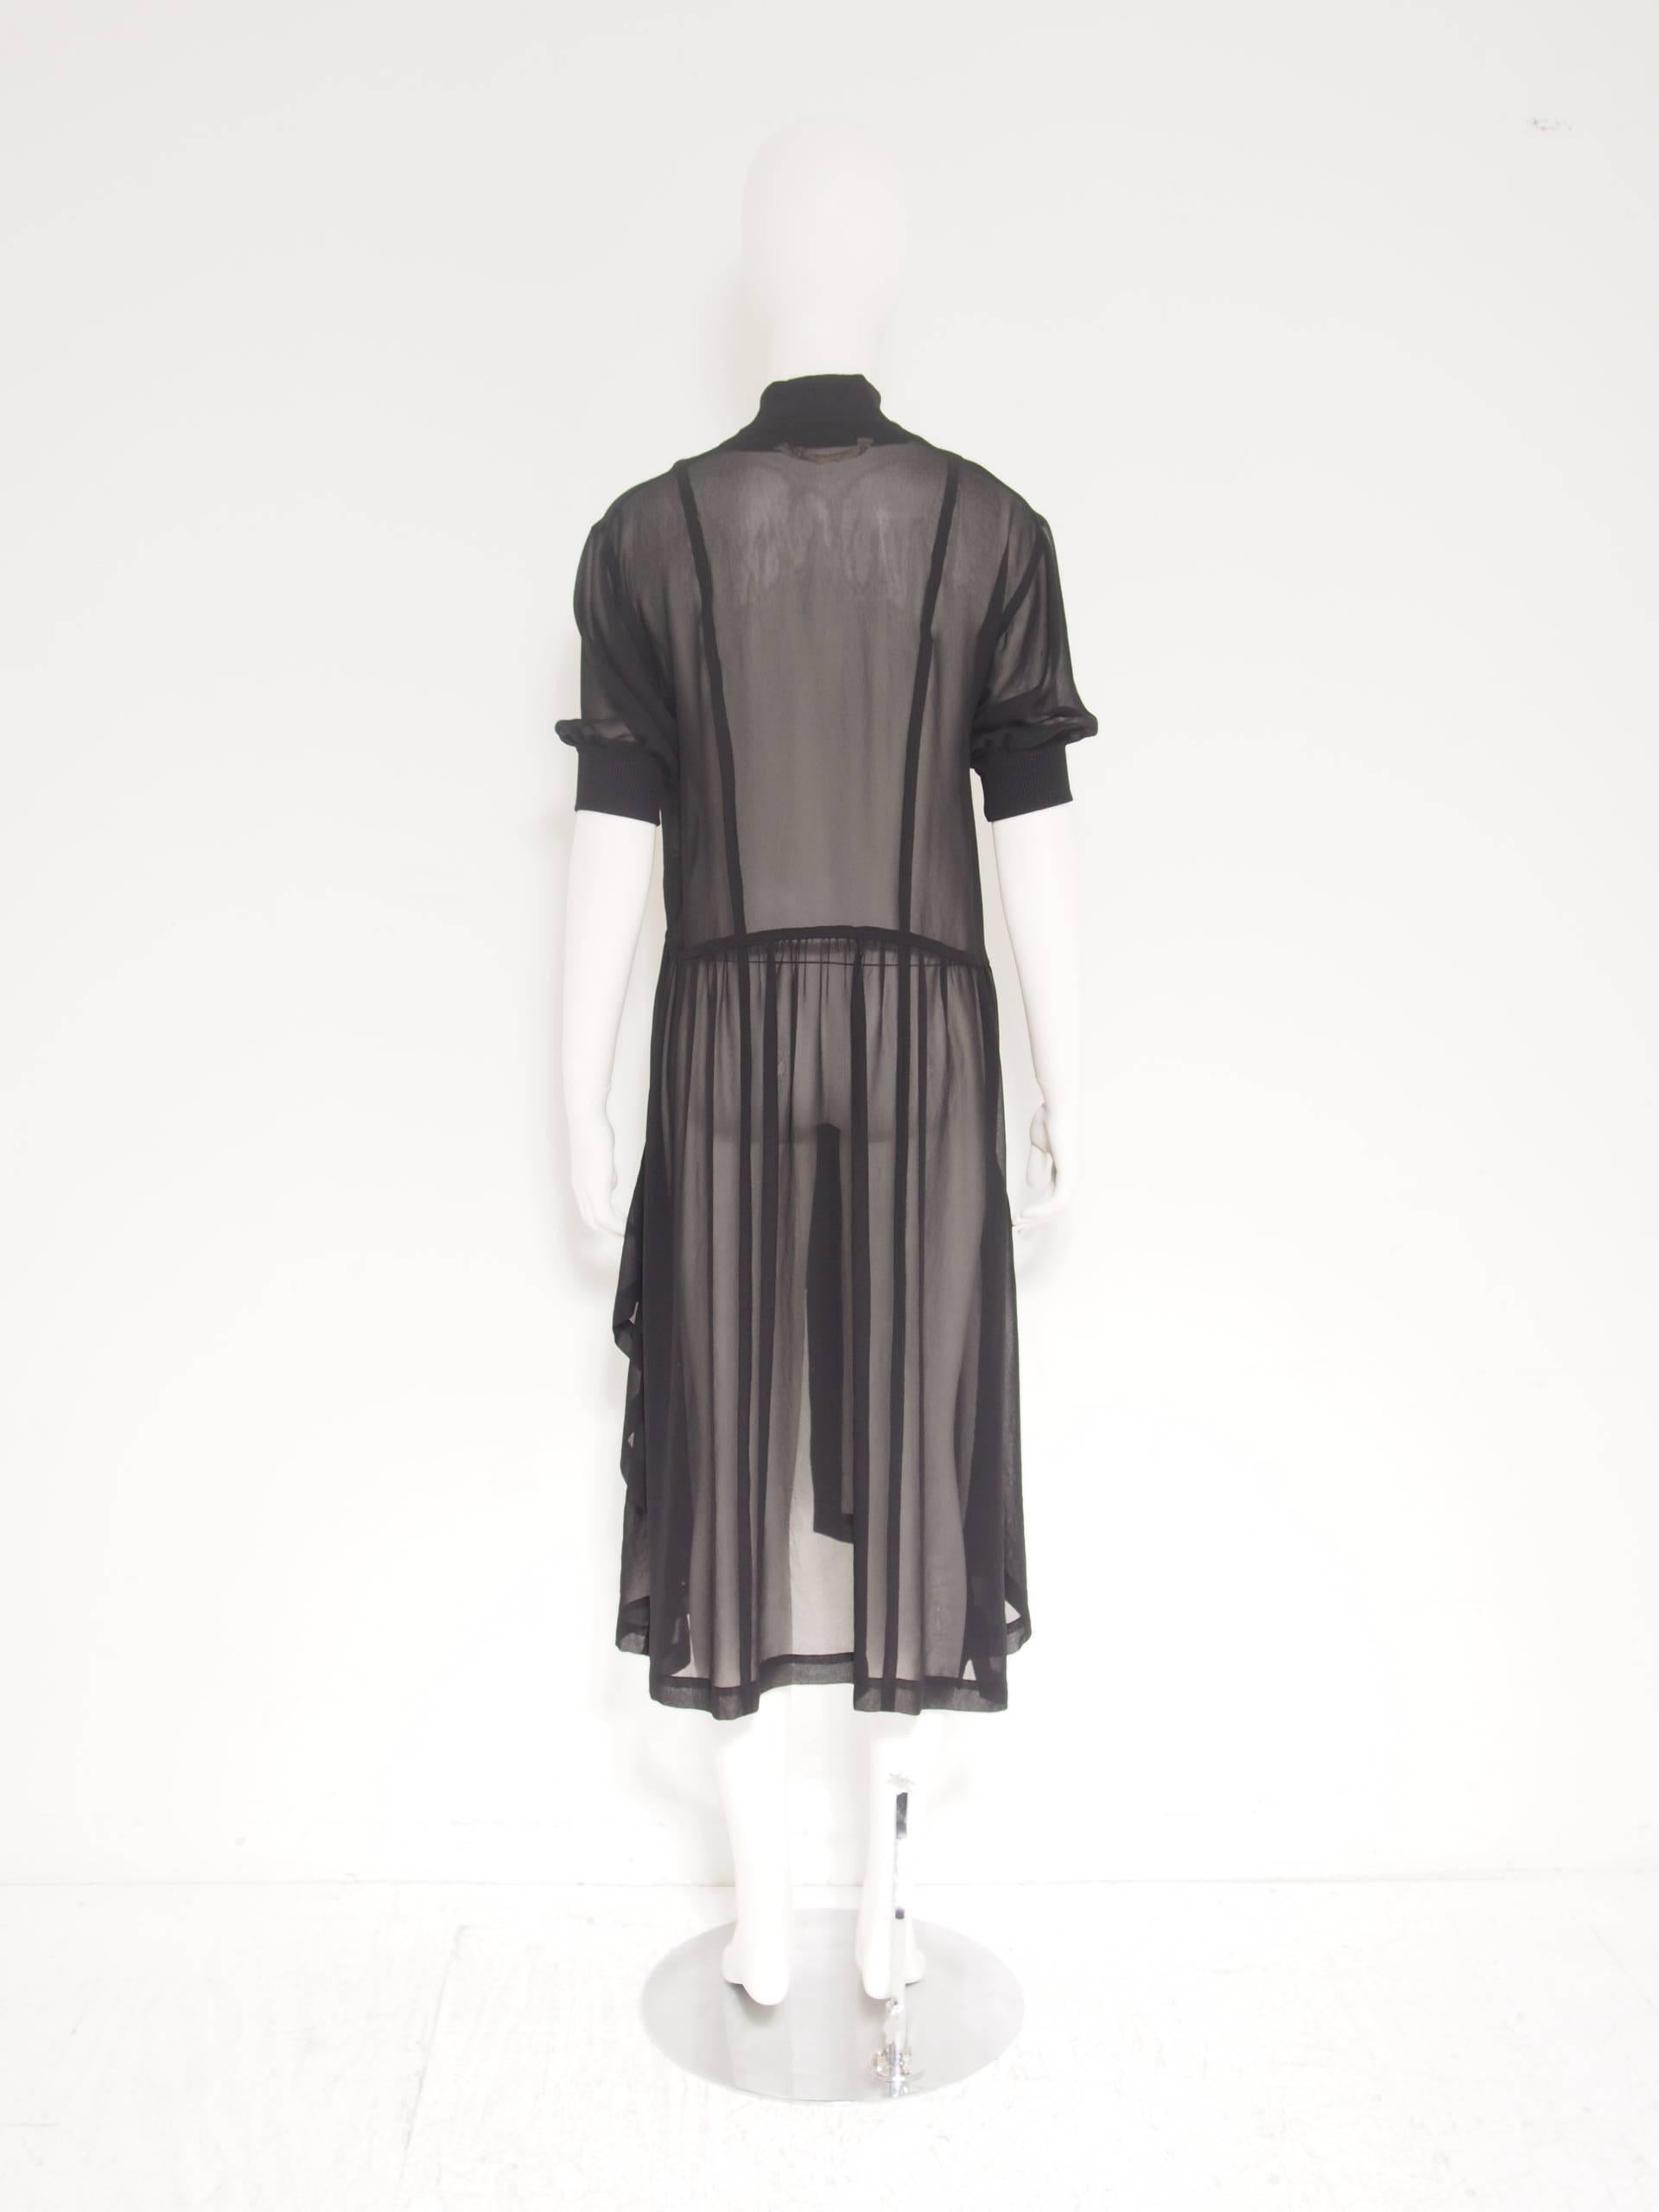 Iconic 1980s Comme des Garçons sheer black silk chiffon zipper closure dress.